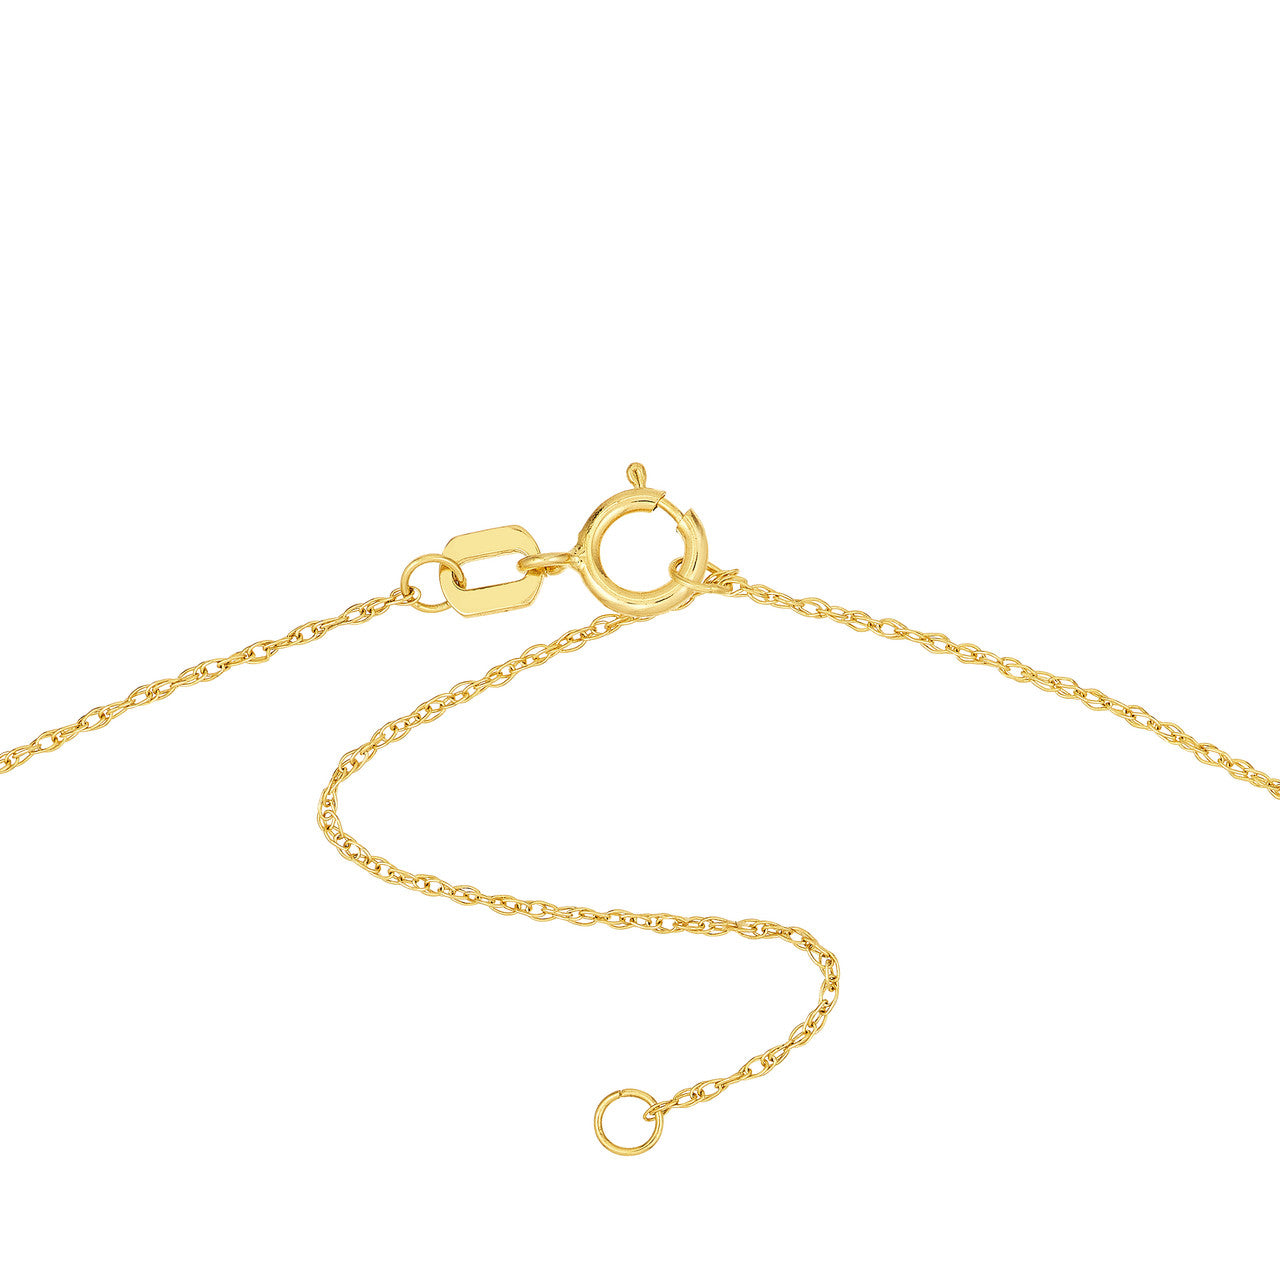 14K Solid Gold - Mini Sugar Skull Necklace